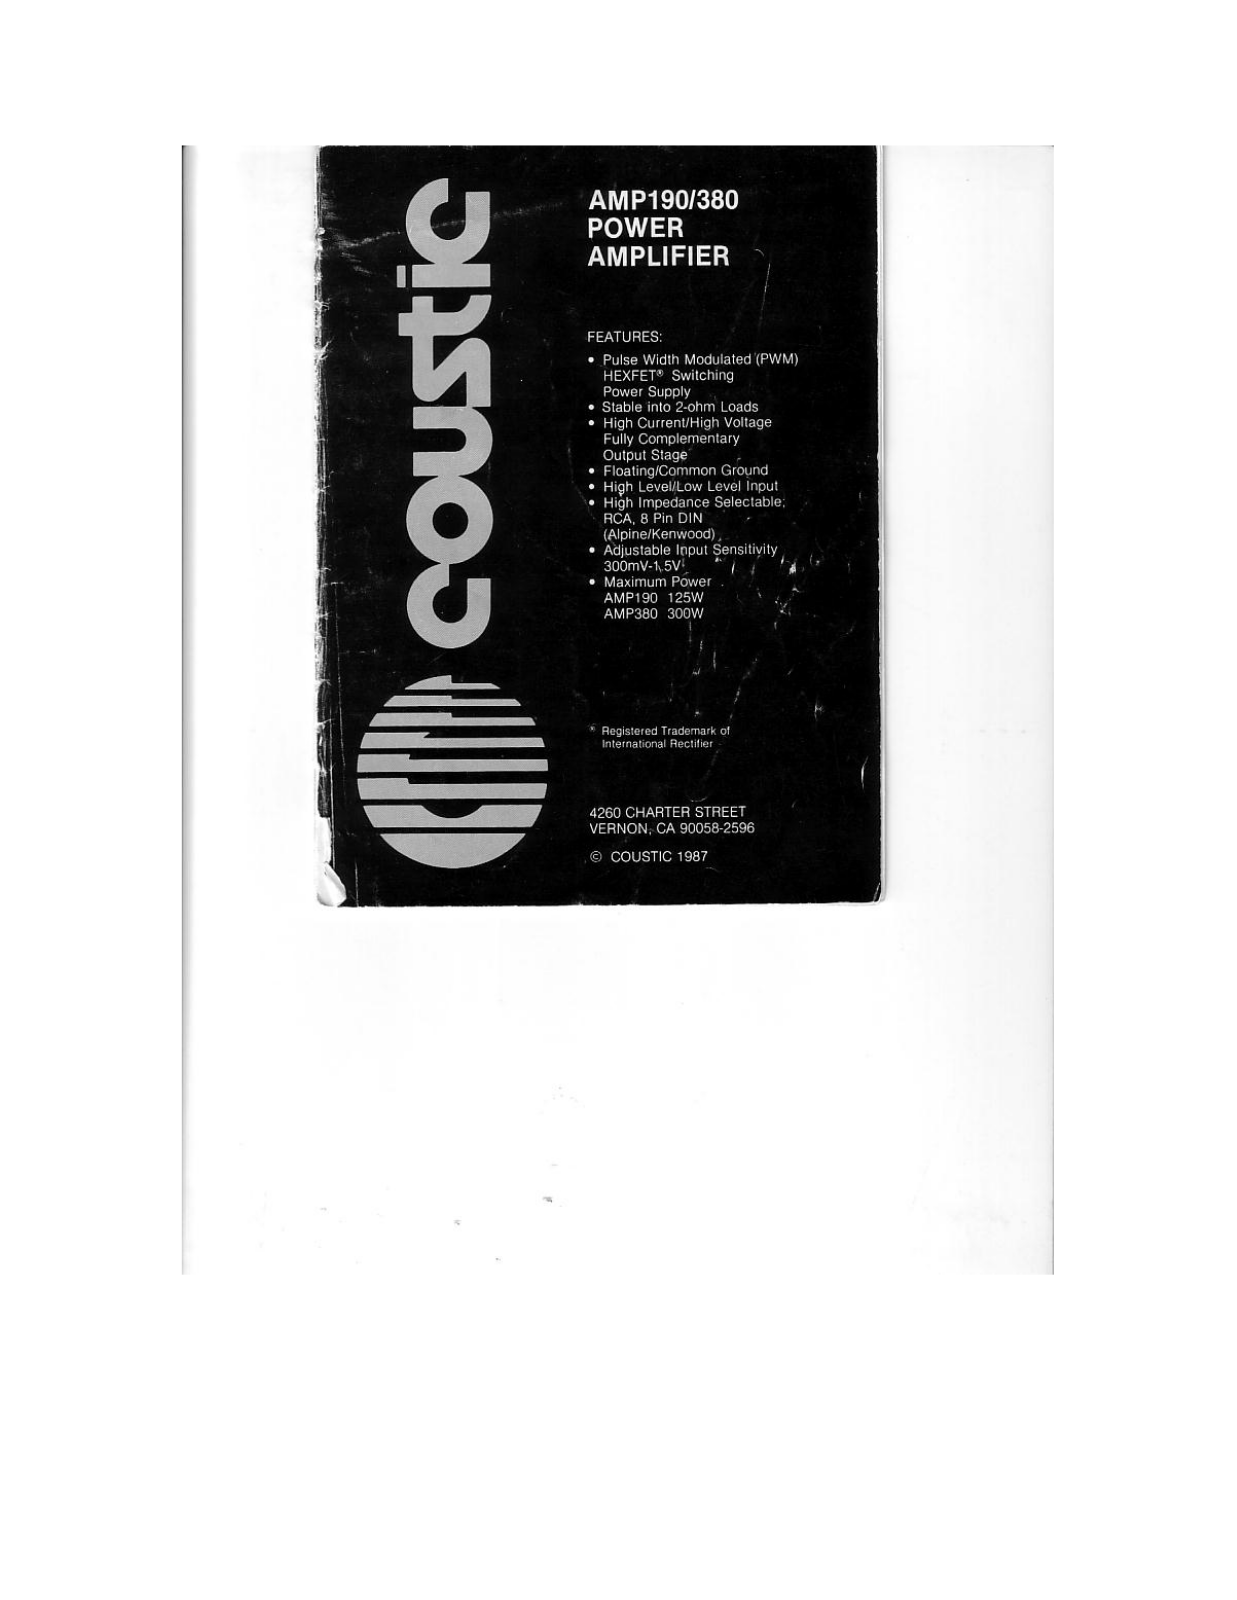 Coustic AMP-380, AMP-190 Instruction Manual